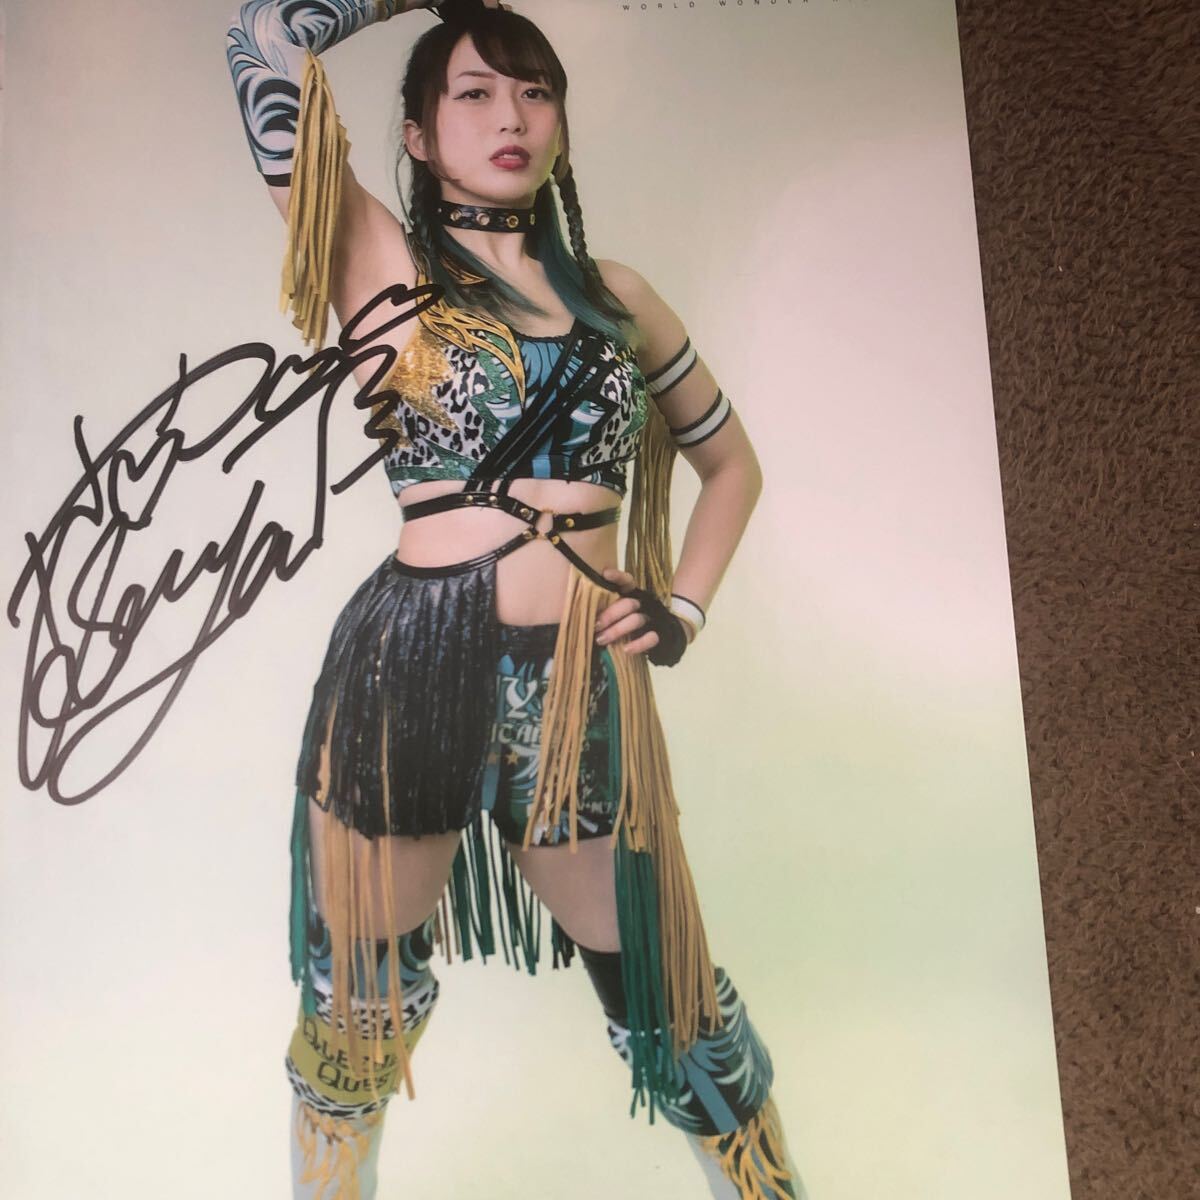  on ... autographed portrait 4 sheets Star dam woman Professional Wrestling 